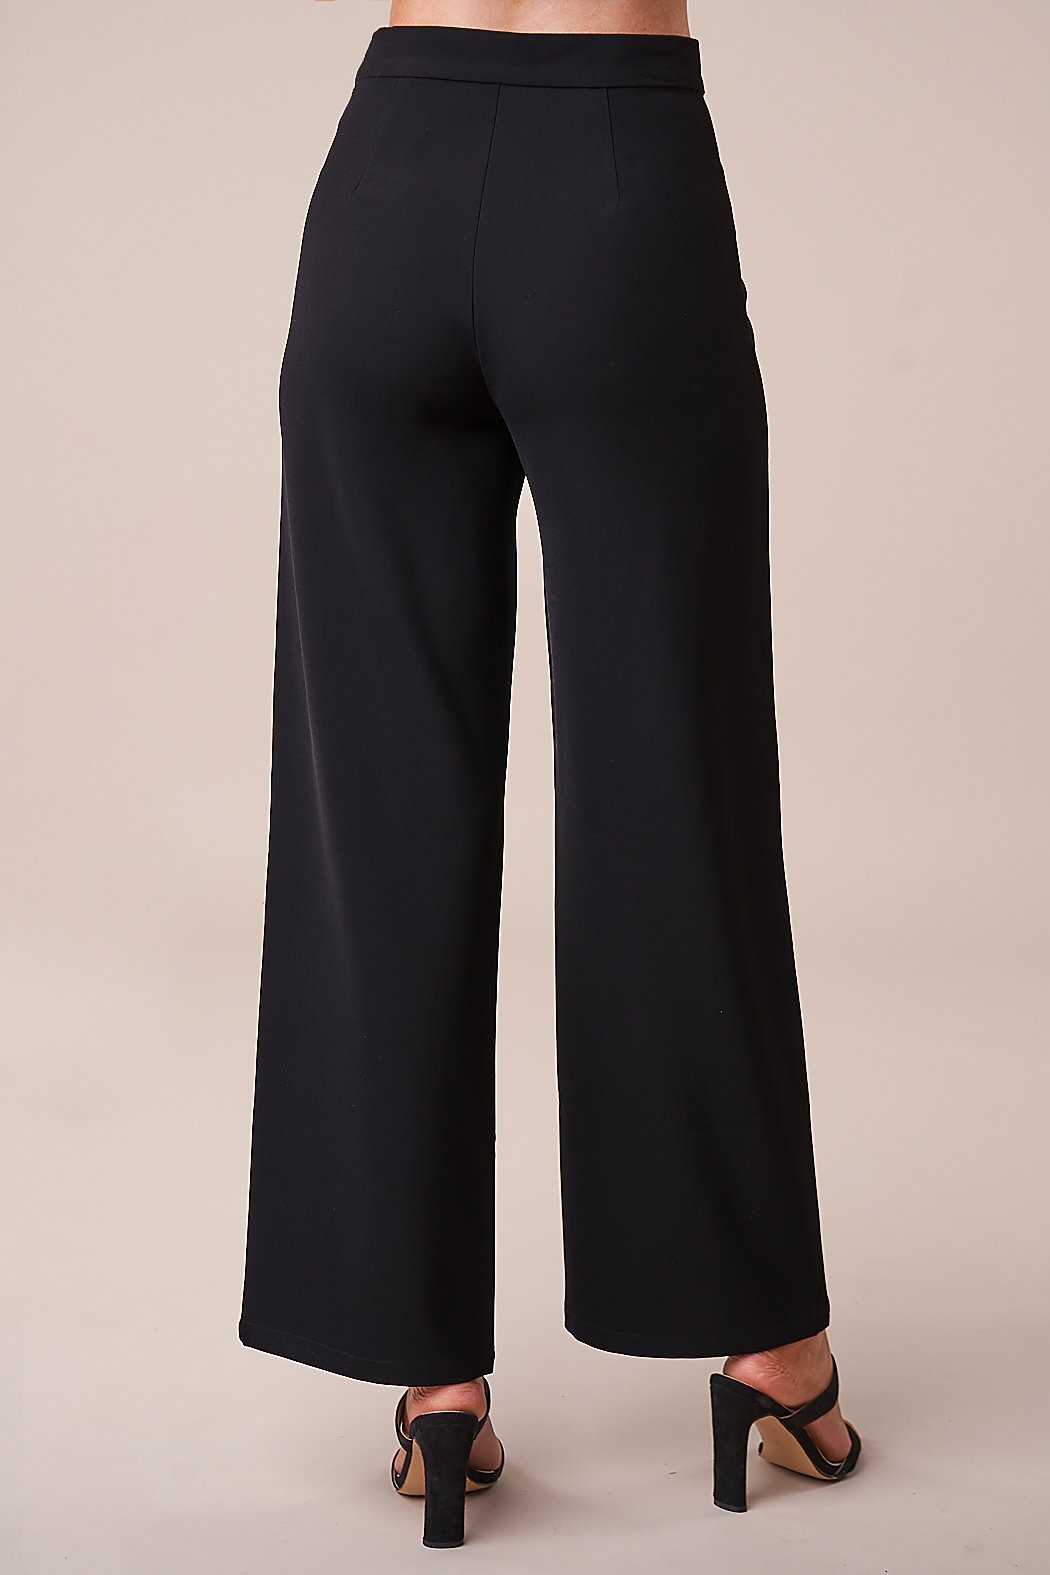 Buy Women's High Waisted Pants Online in Australia